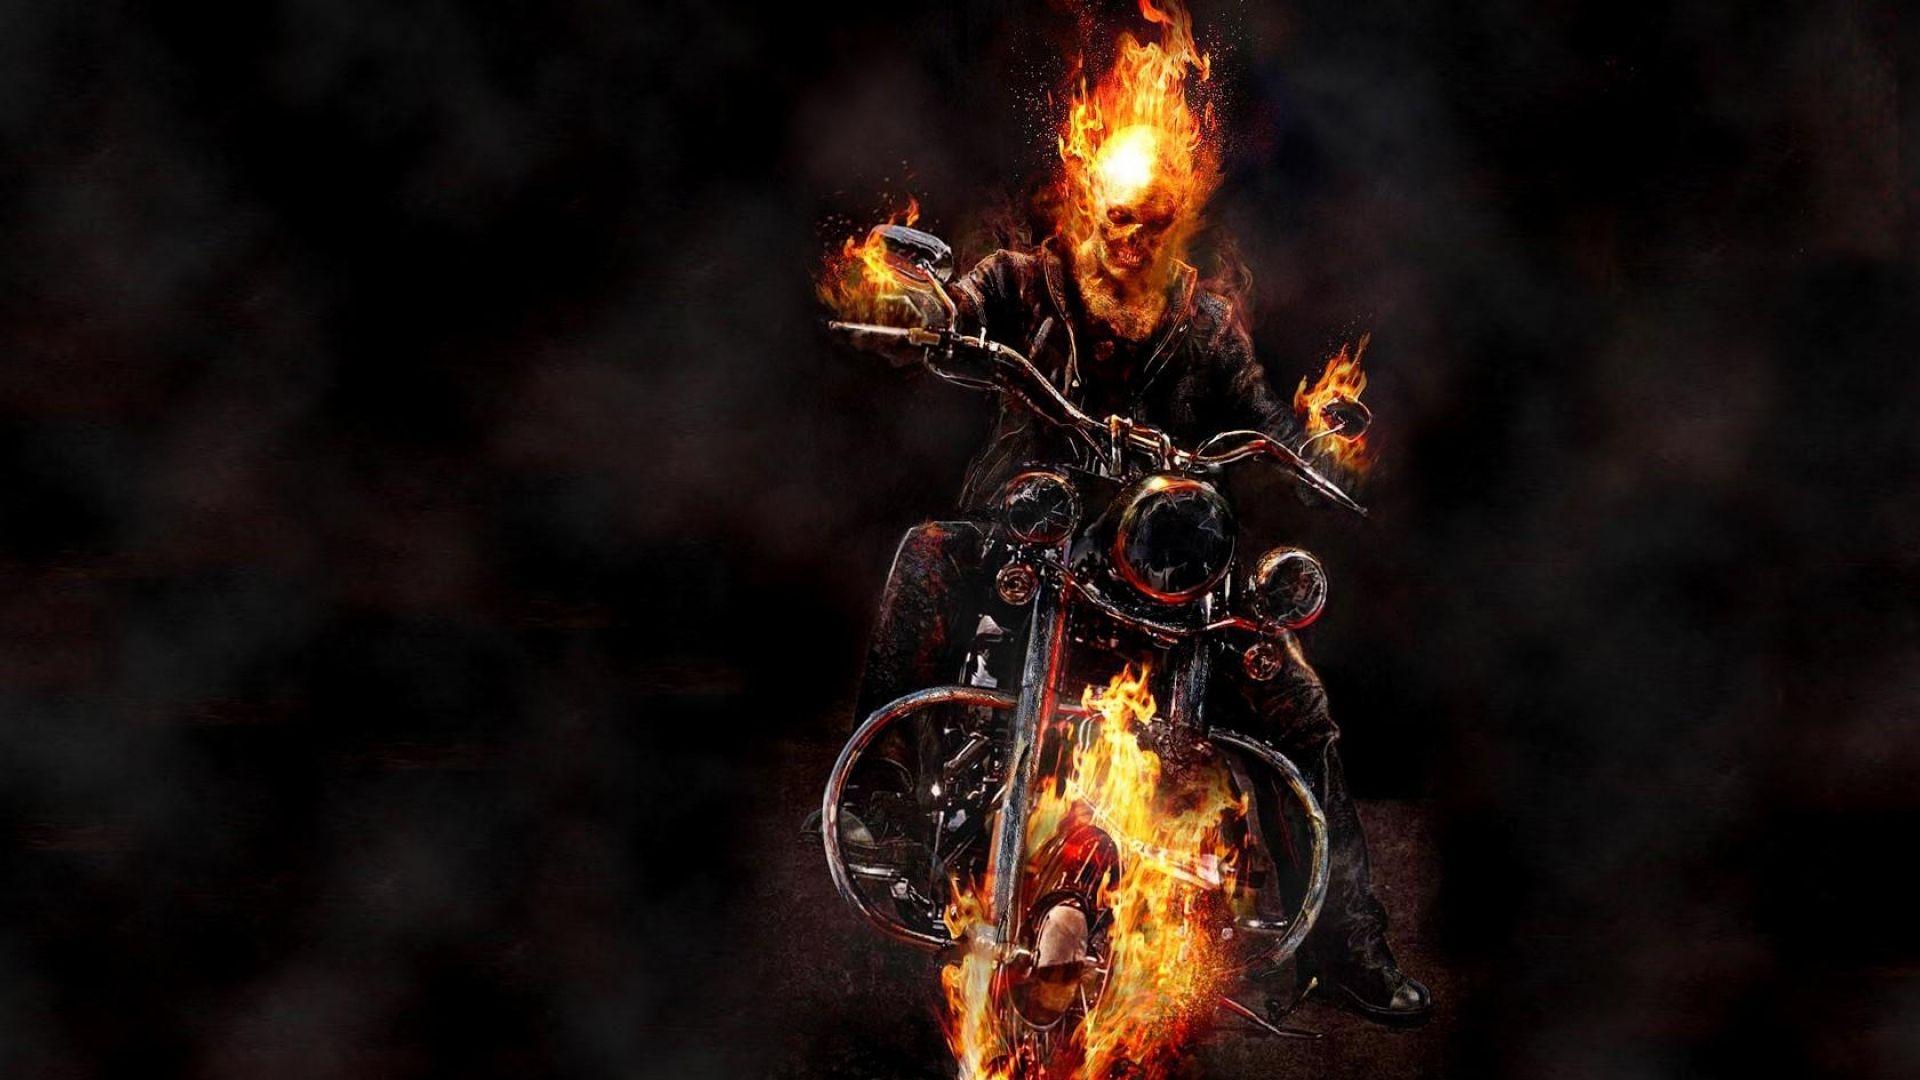 Motorcycle Ghost Rider Wallpaper 2K Wallpapers